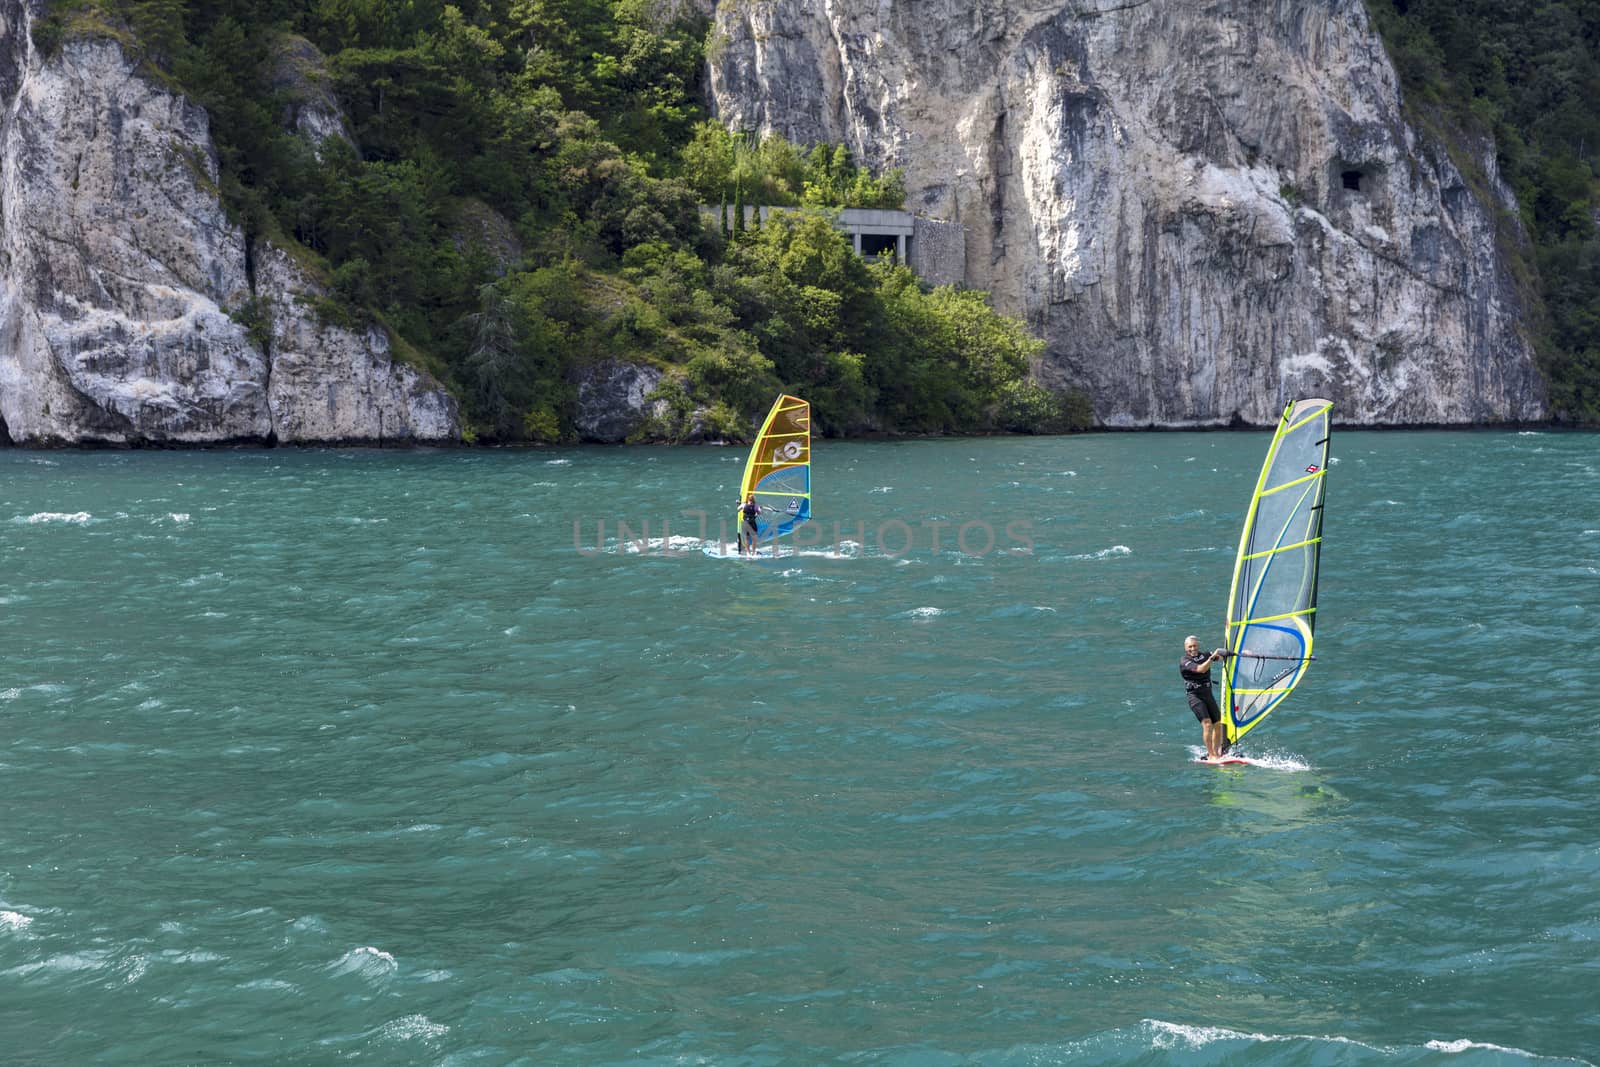 Lake Garda, Italy, August 2019, some windsurfing on the lake